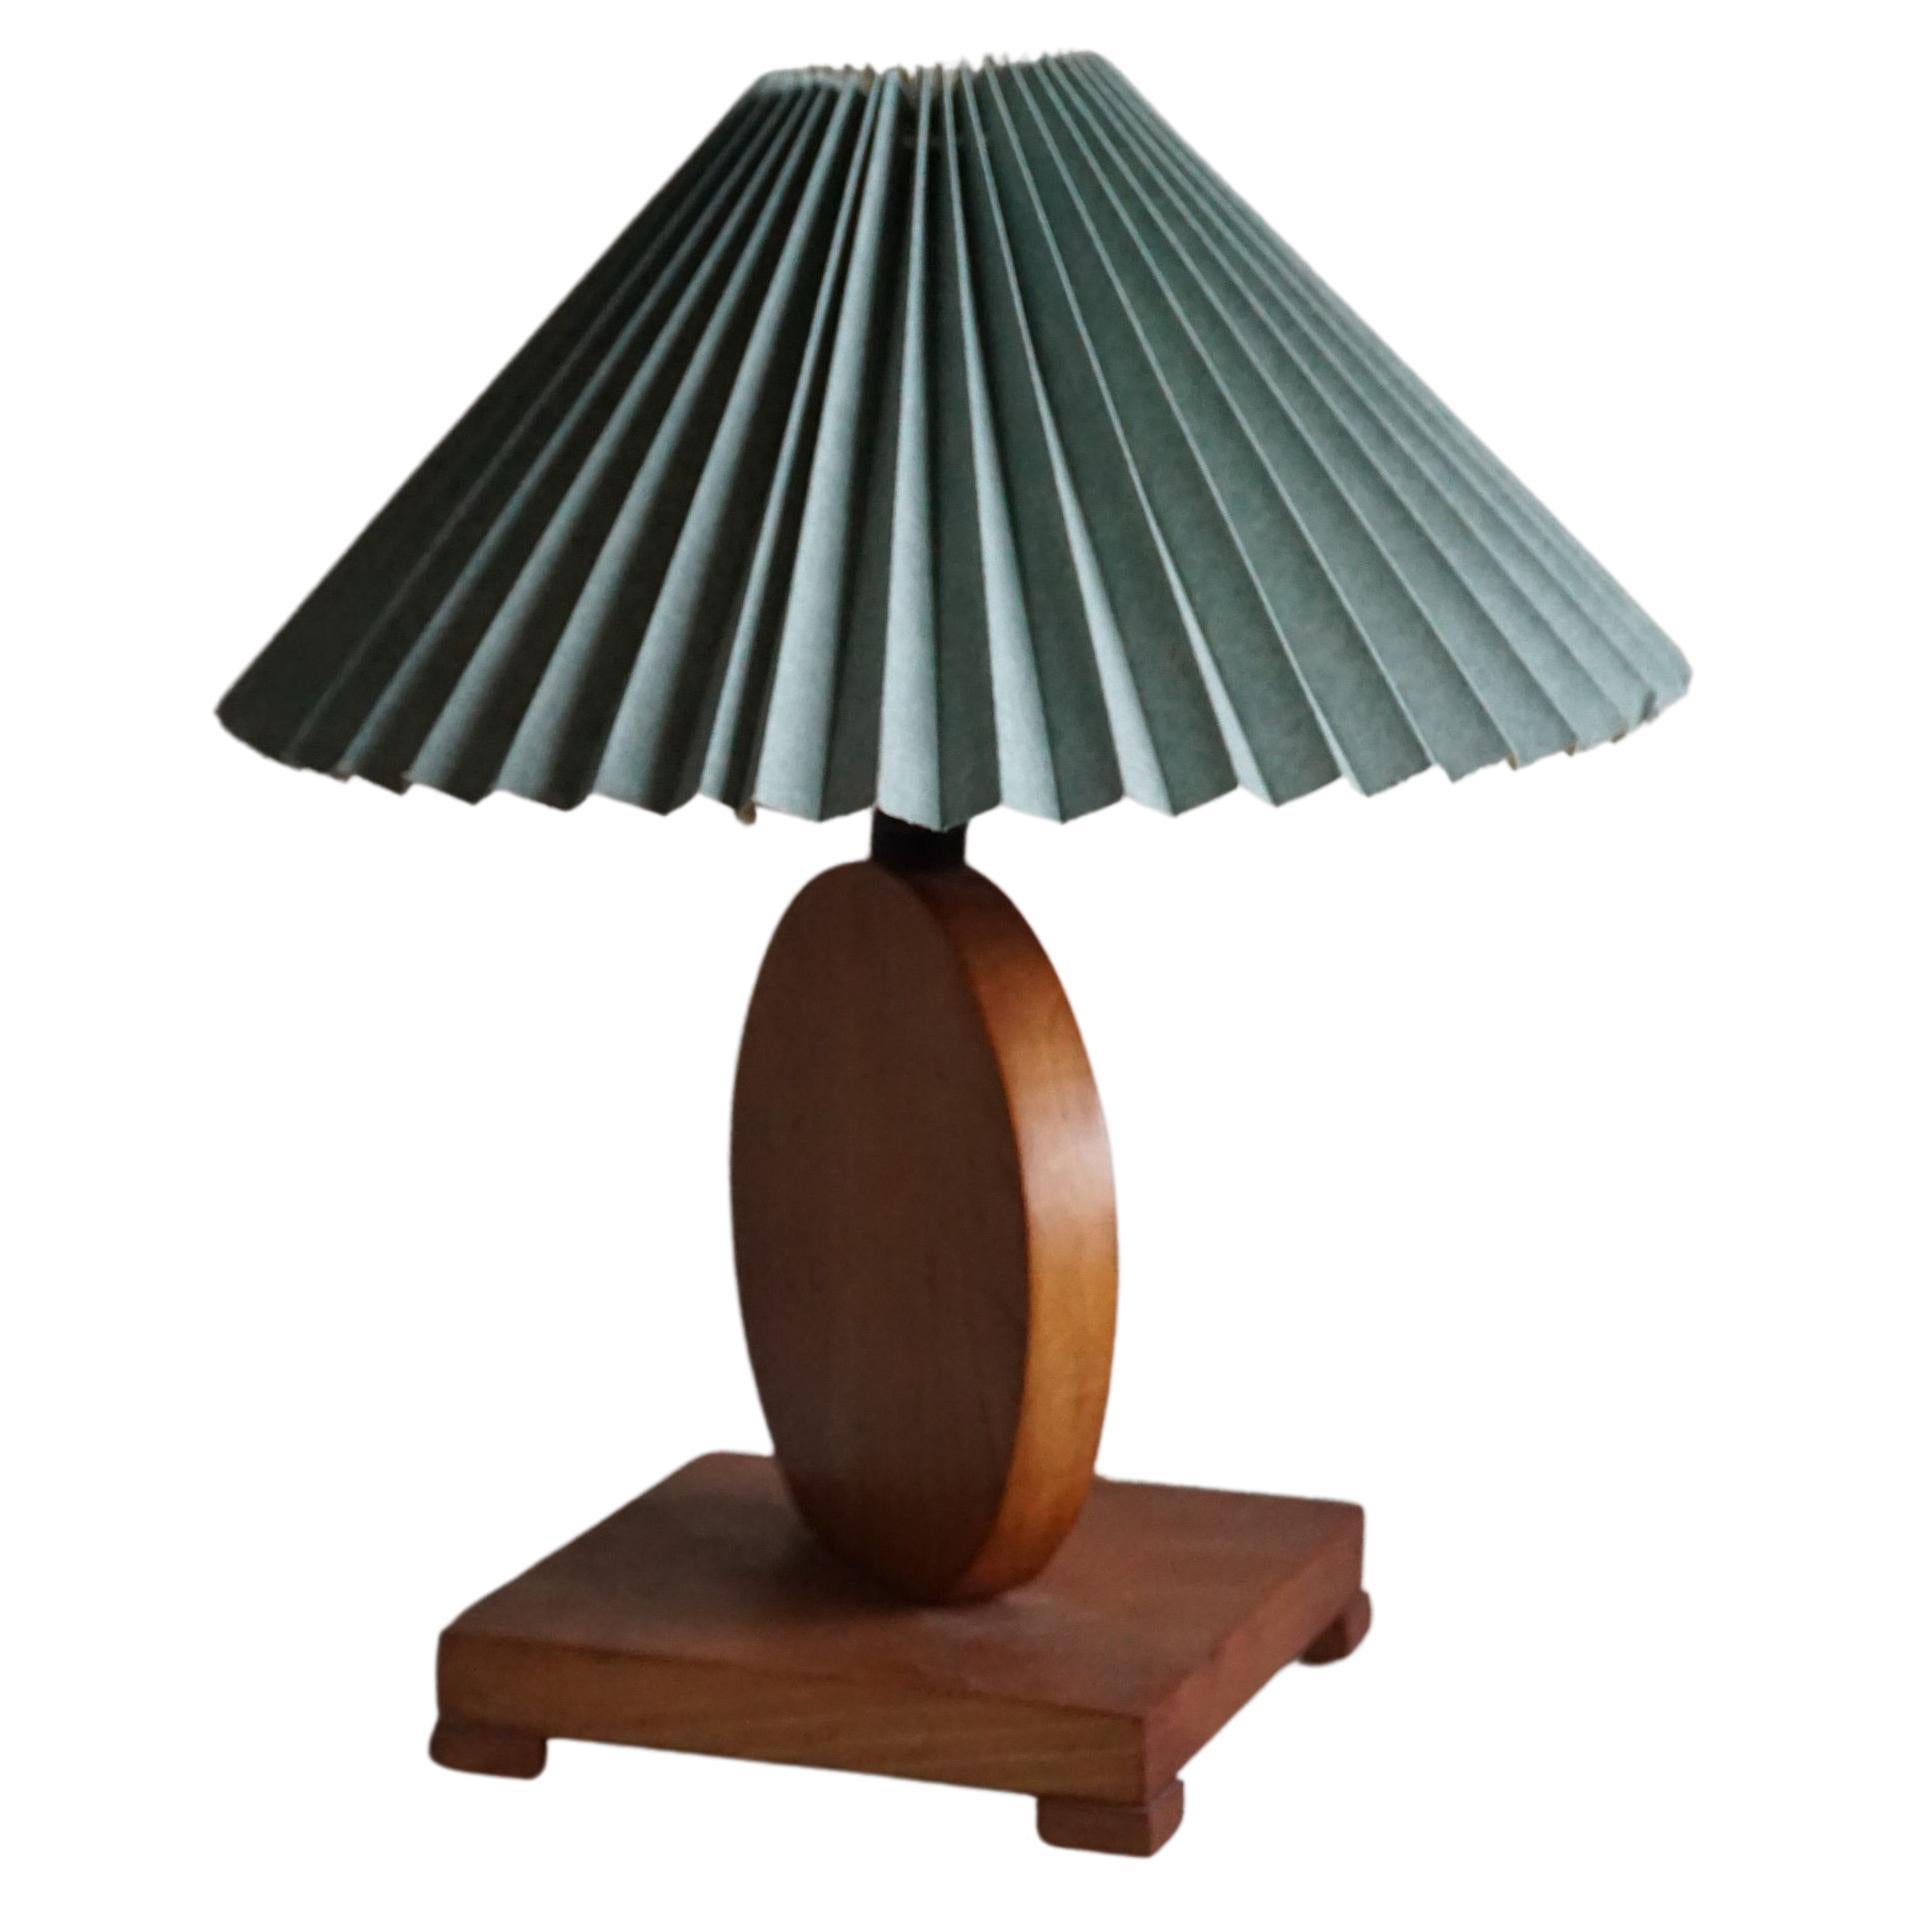 Danish Art Deco Round Wooden Table Lamp in Oak, 1940s